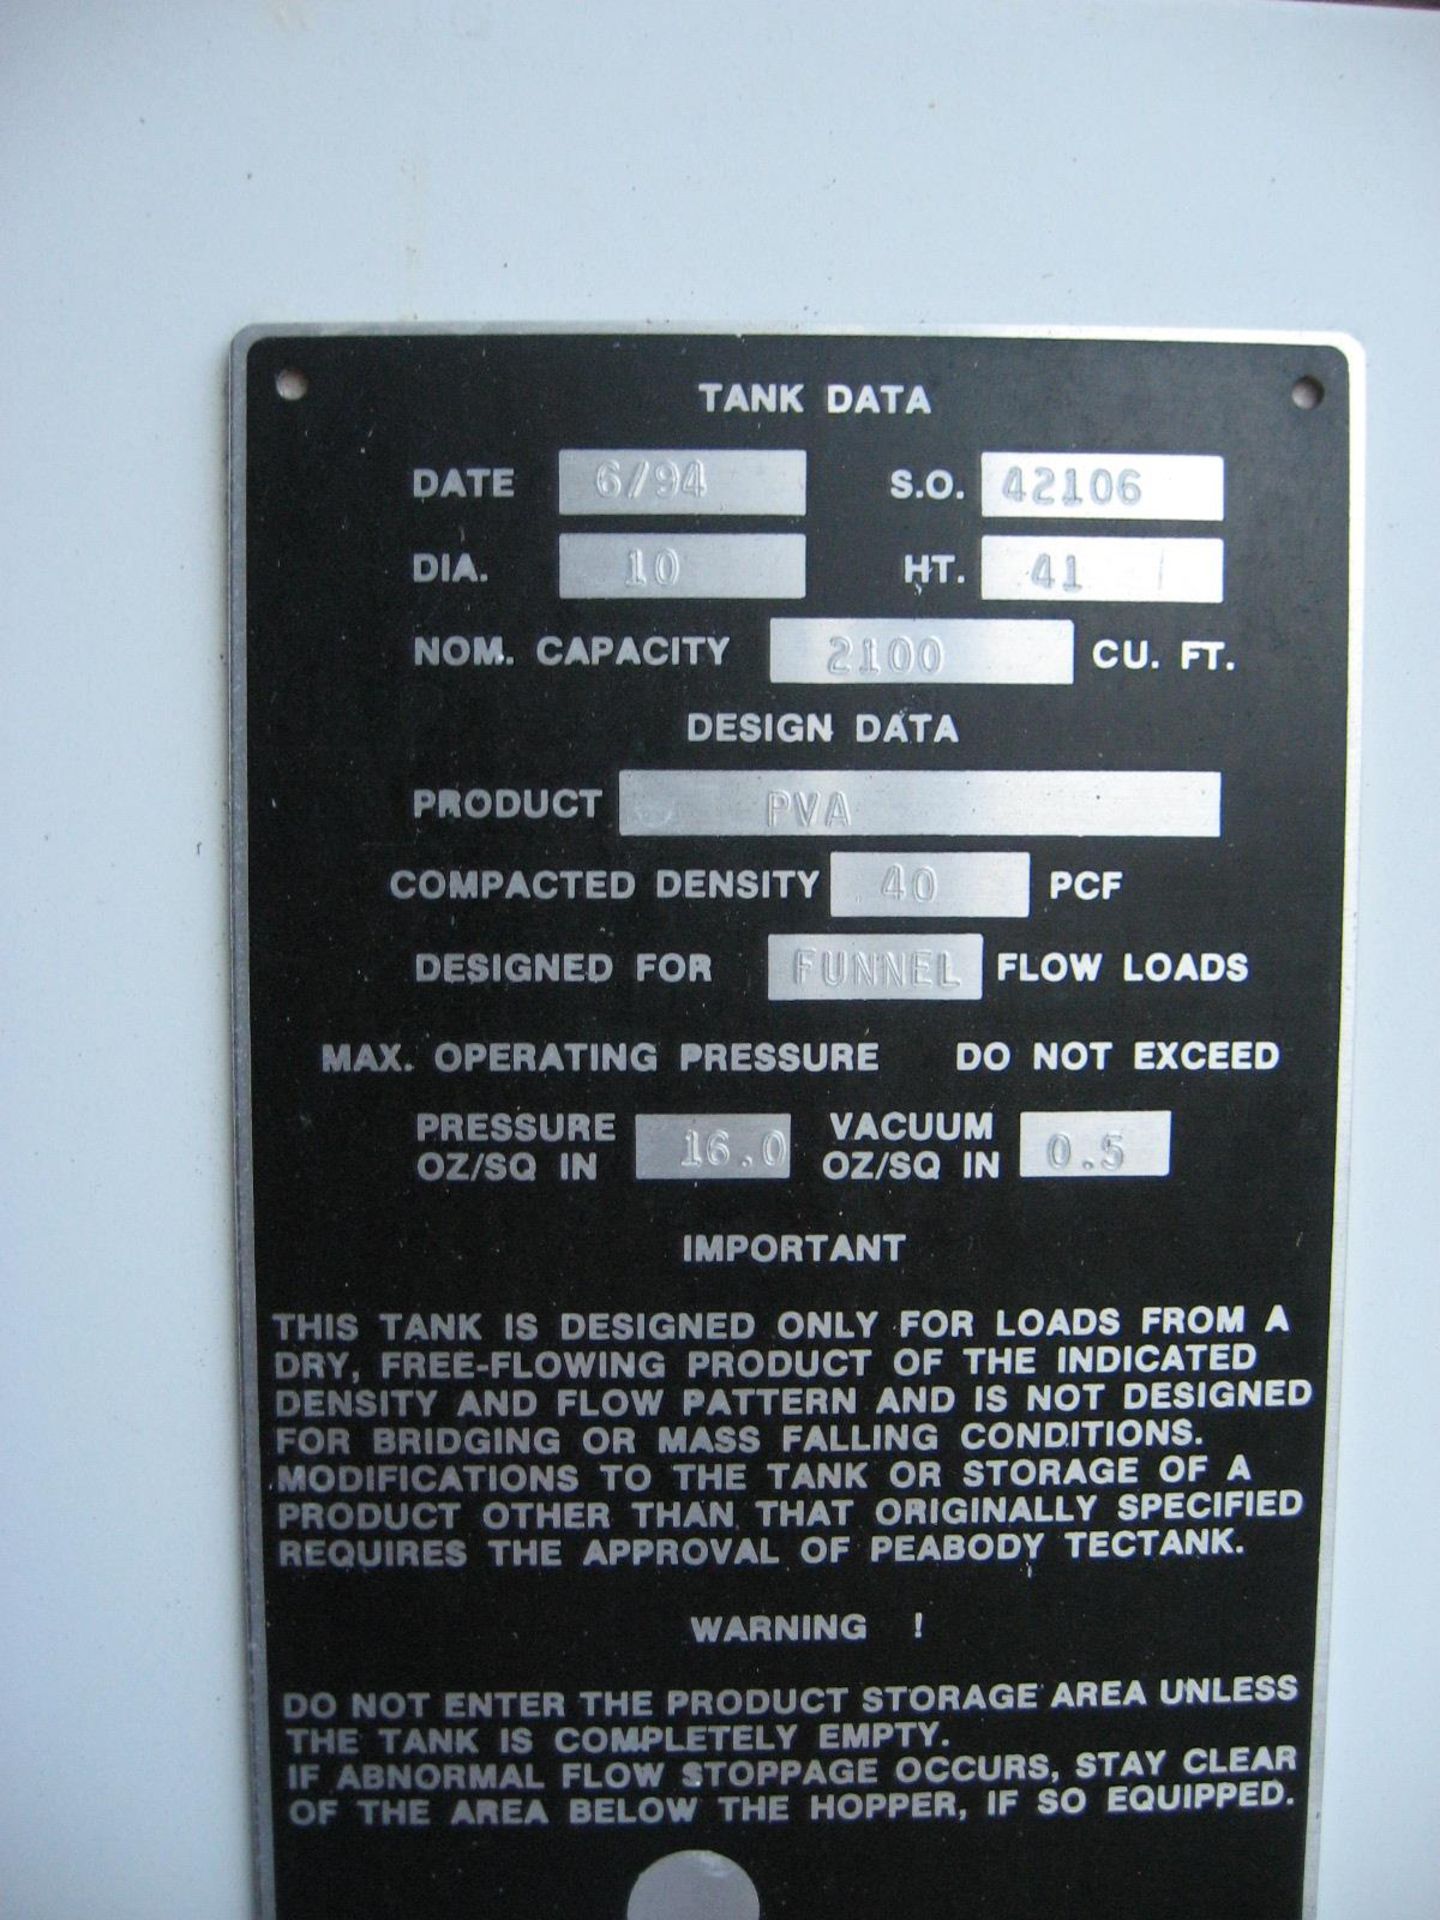 1994 41' HIGH X 10' DIAMETER SILO W/ CONTROLS, 2,100 CU. FT CAP., PRODUCT: PVA, 40 PCF, DESIGNED FOR - Image 4 of 12